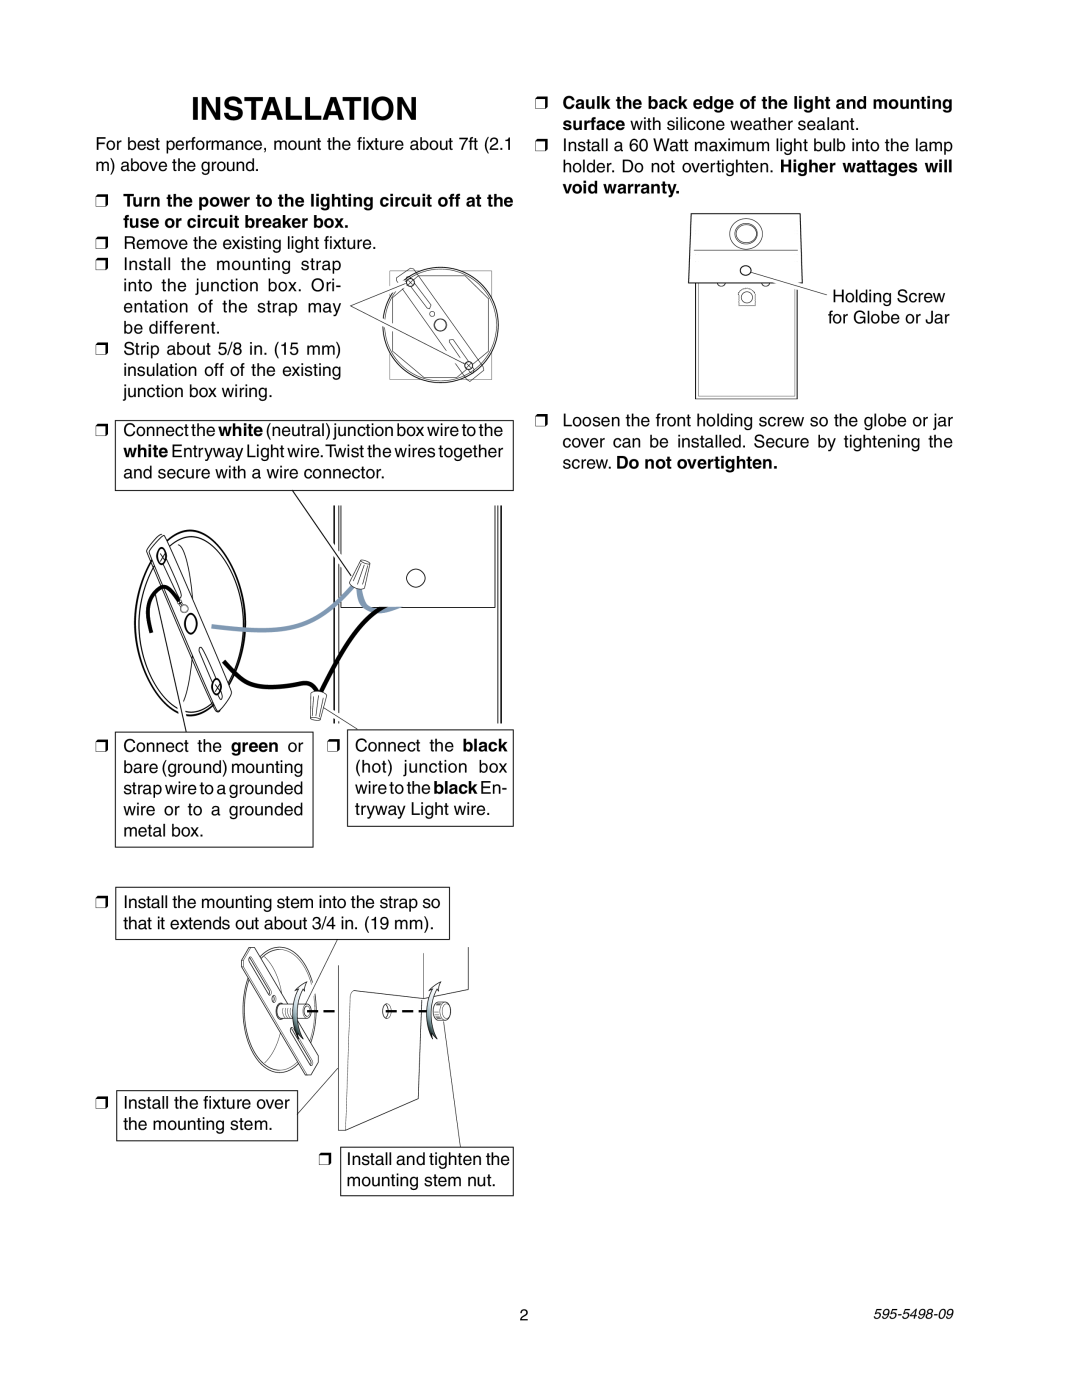 Heath Zenith SL-5610/15 manual Installation 